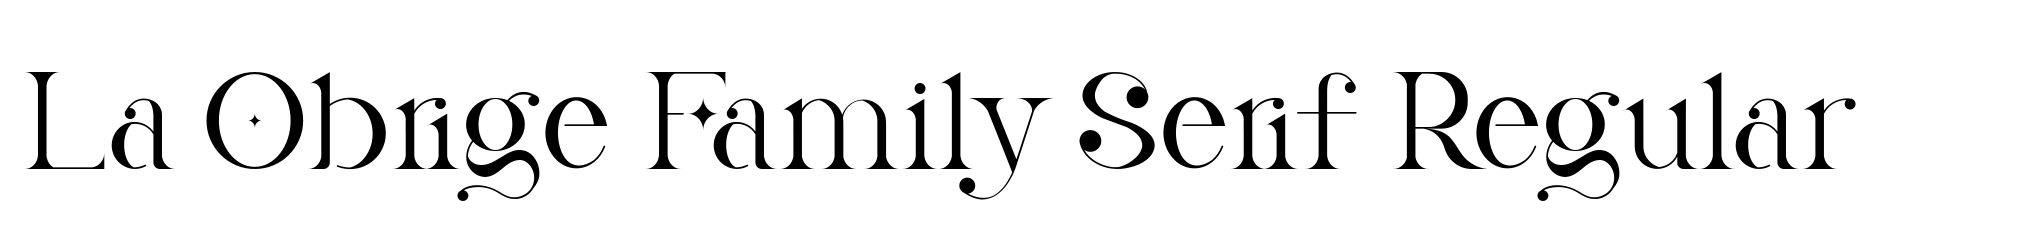 La Obrige Family Serif Regular image